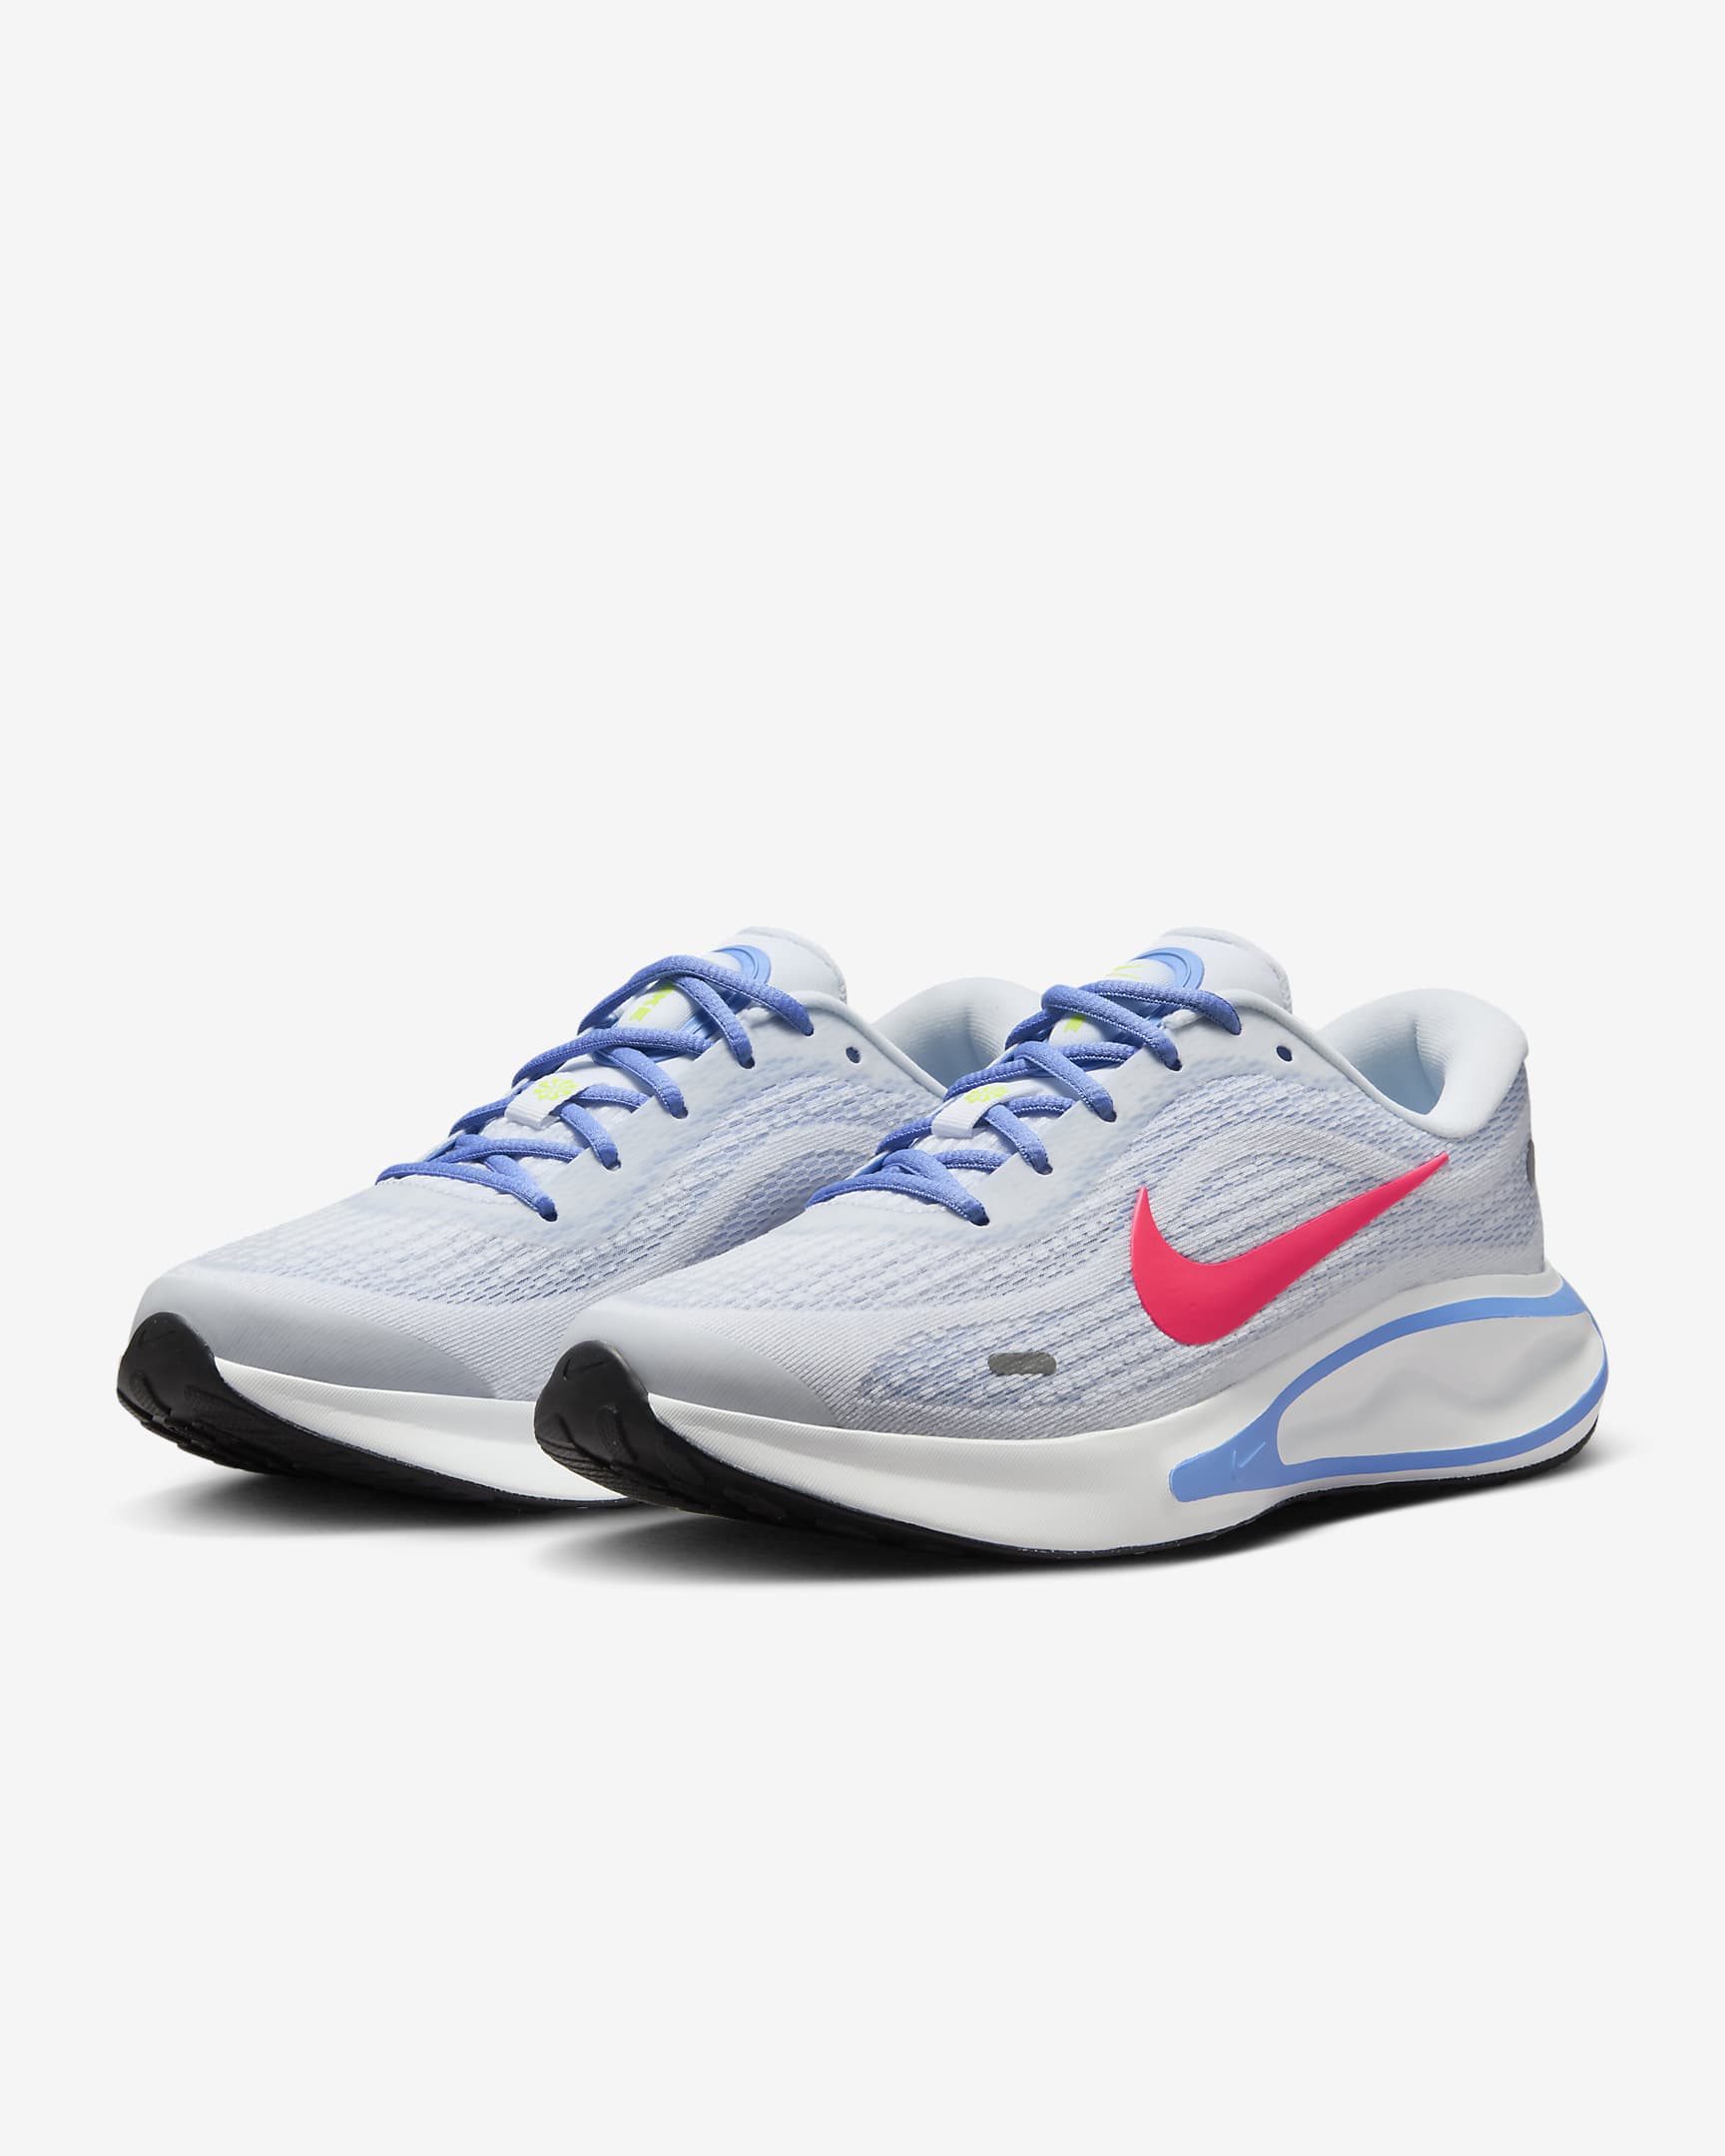 Nike Journey Run Women's Road Running Shoes - White/Royal Pulse/Volt/Hot Punch